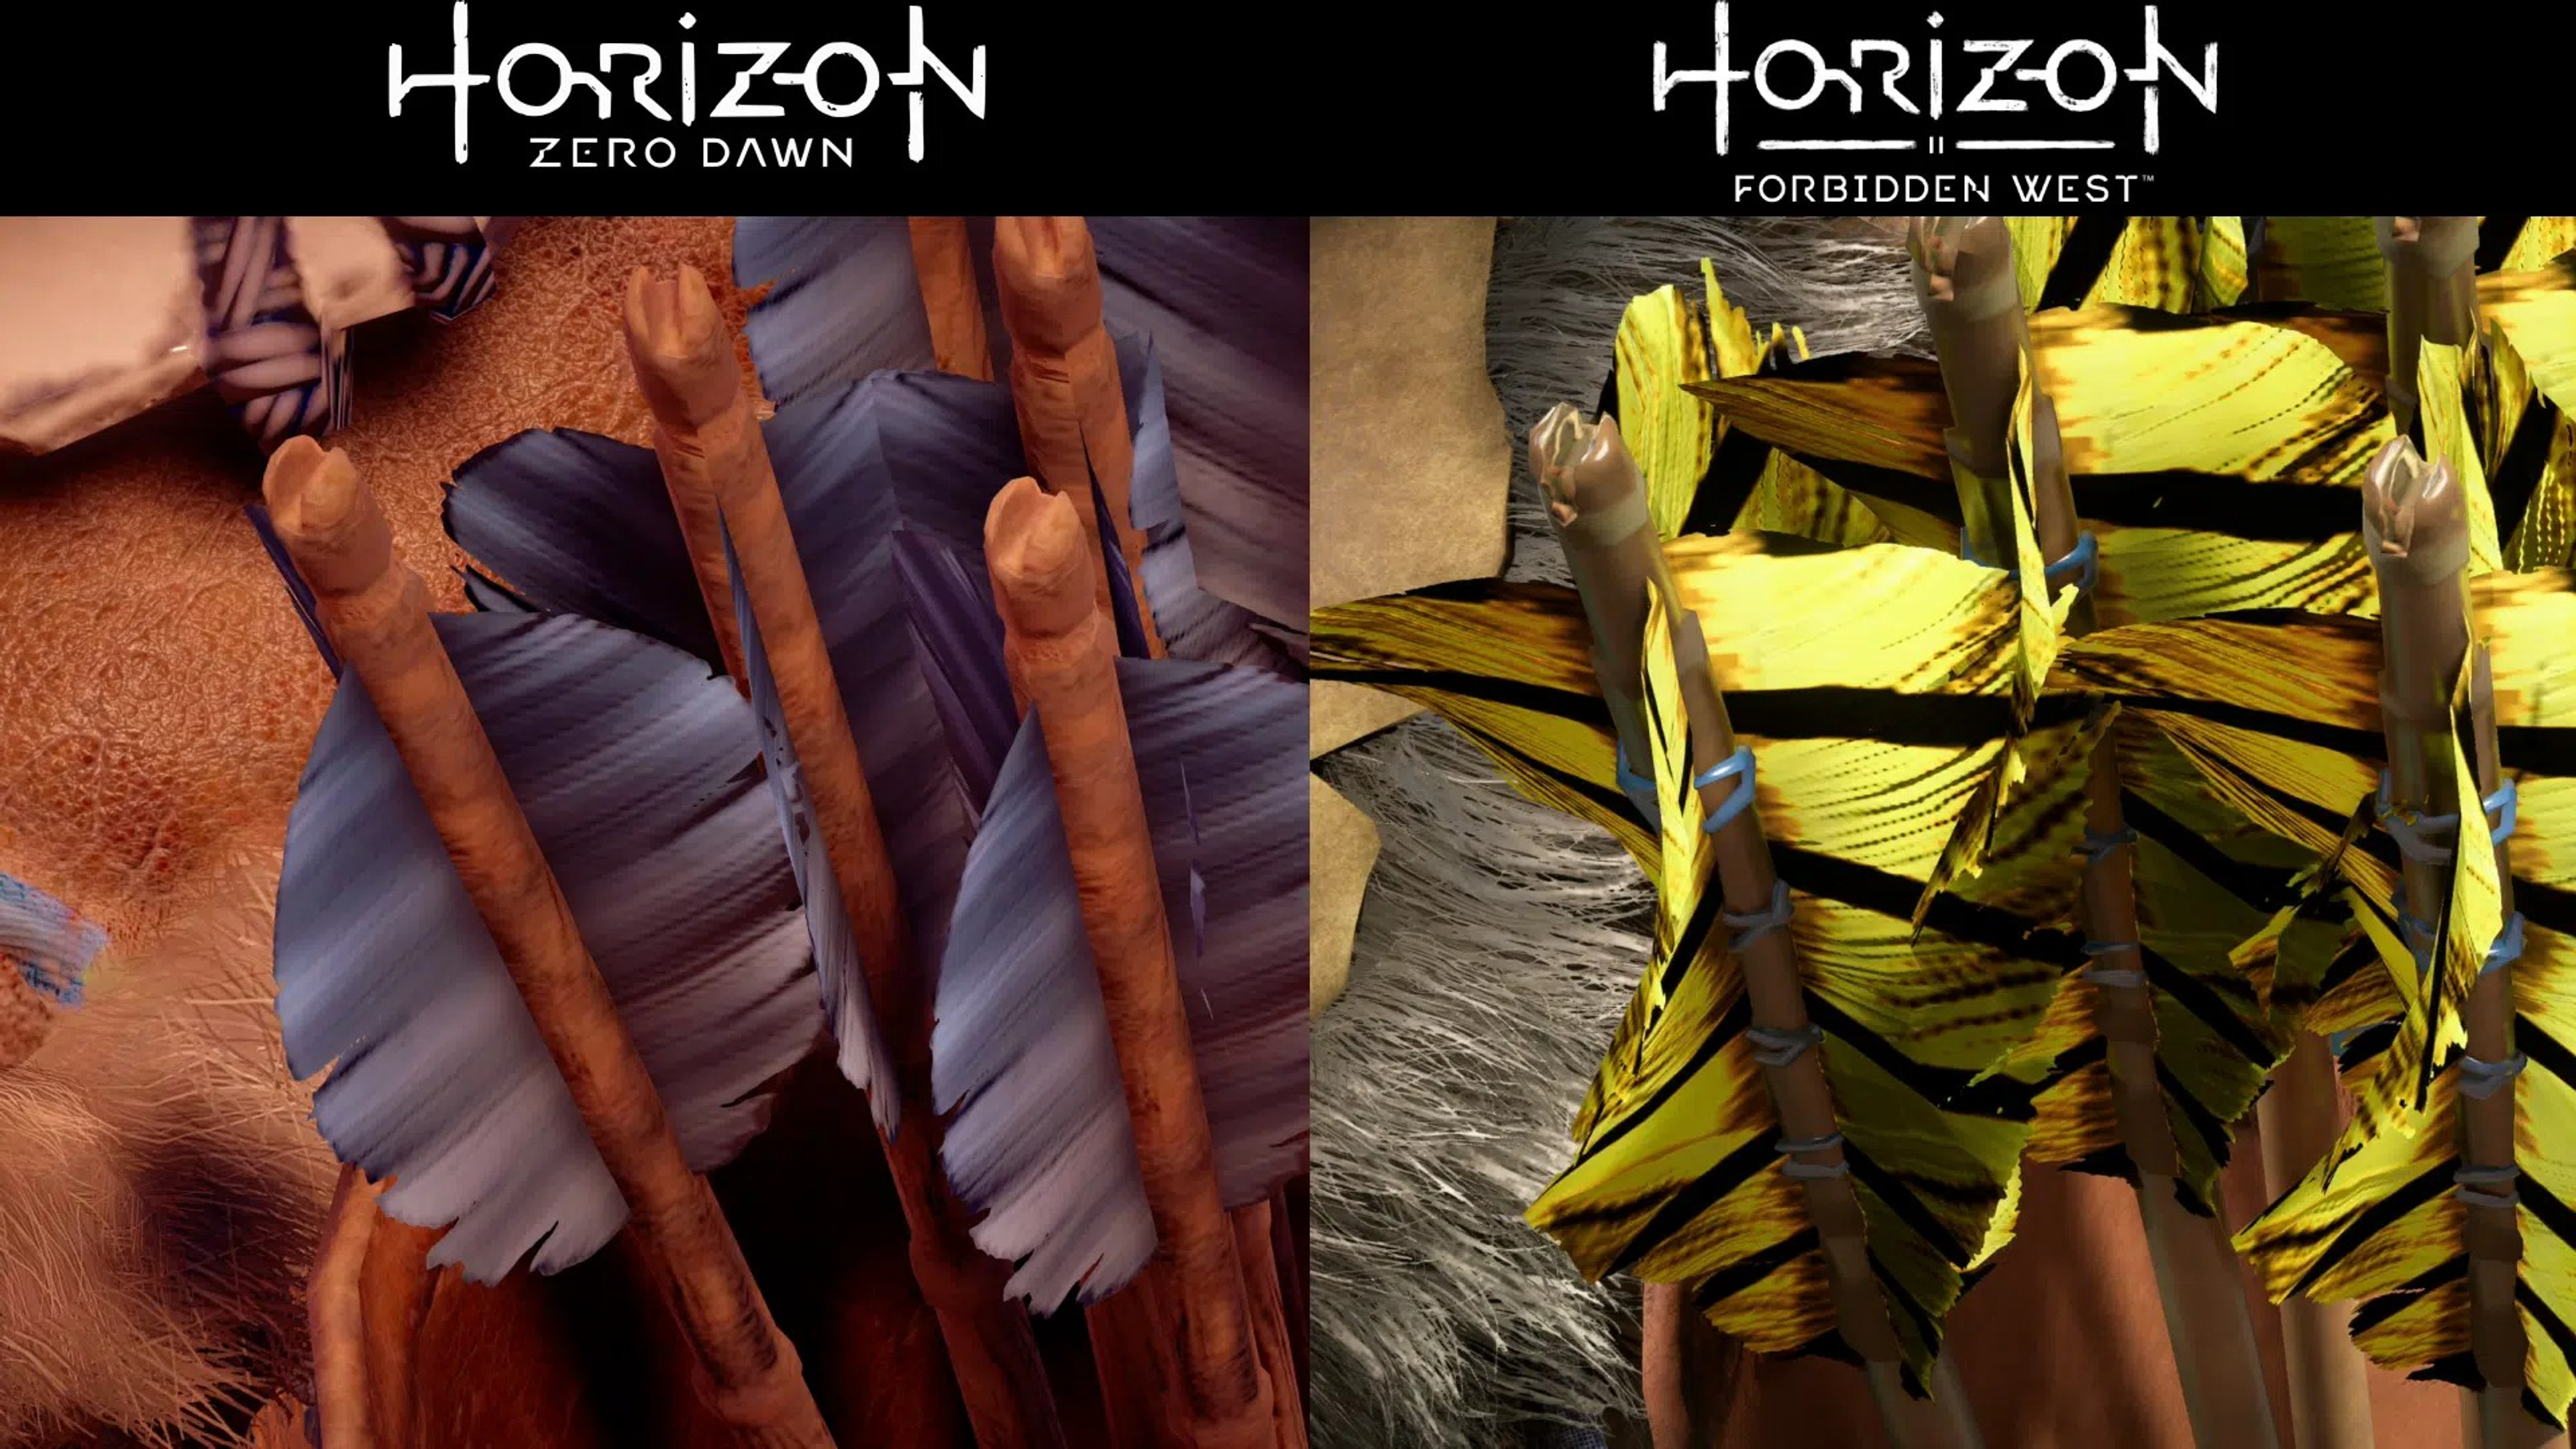 horizon-forbidden-west-vs-horizon-zero-dawn-comparison-3